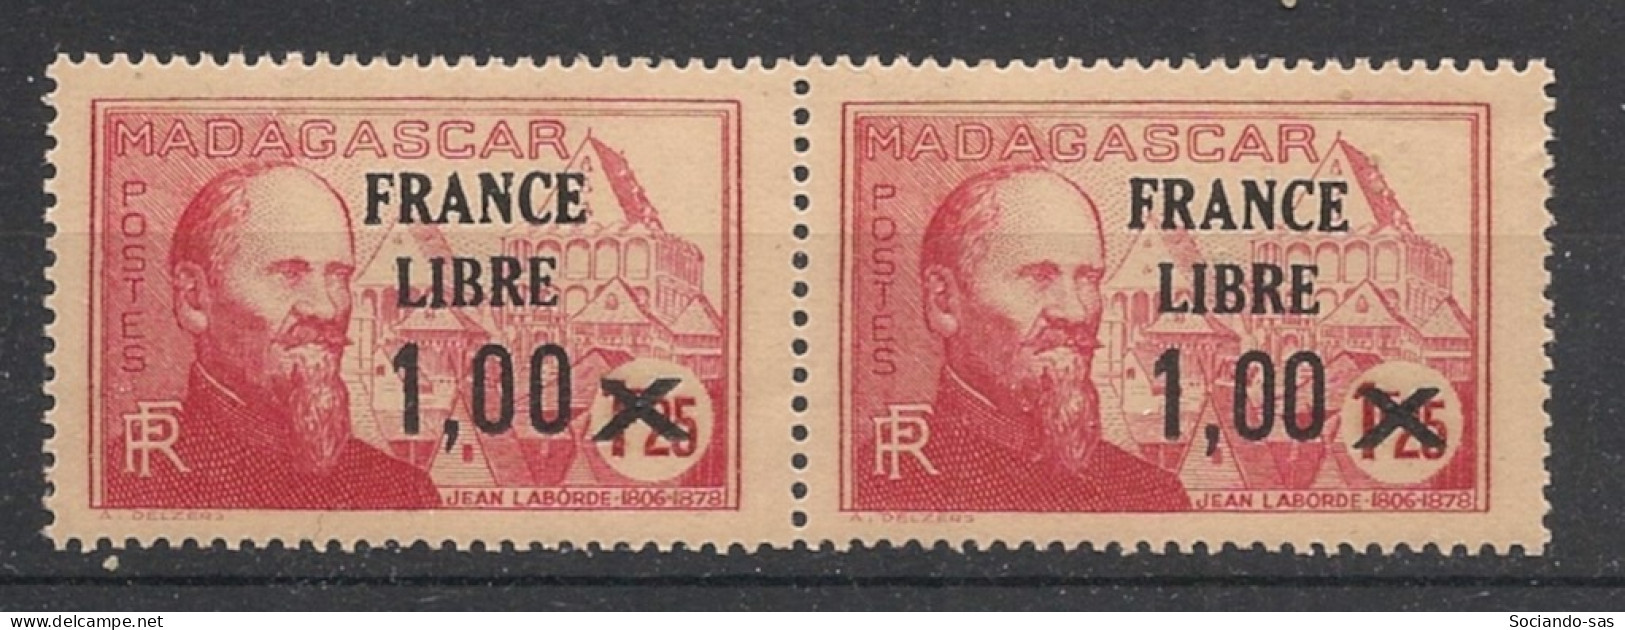 MADAGASCAR - 1942 - N°YT. 260b - France Libre 1,00 Sur 1f25 - VARIETE Surcharge Espacée T.a.n. - Neuf Luxe ** / MNH - Neufs